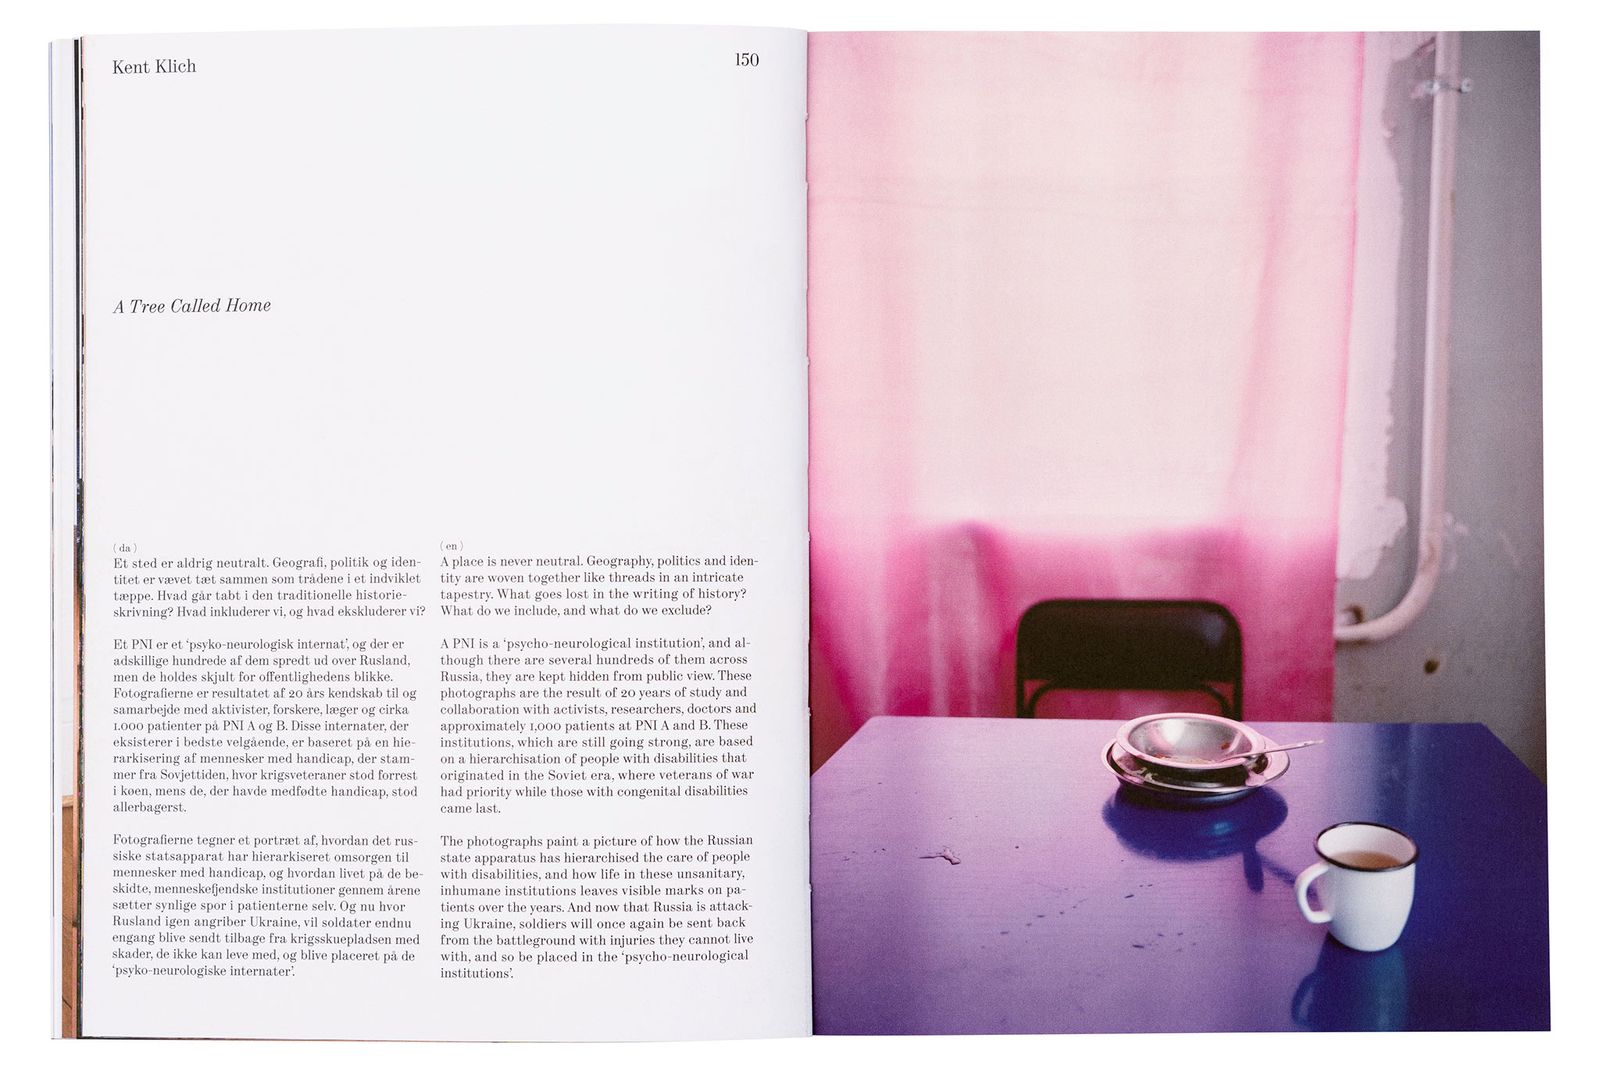 Photobook Review: New Danish Photography